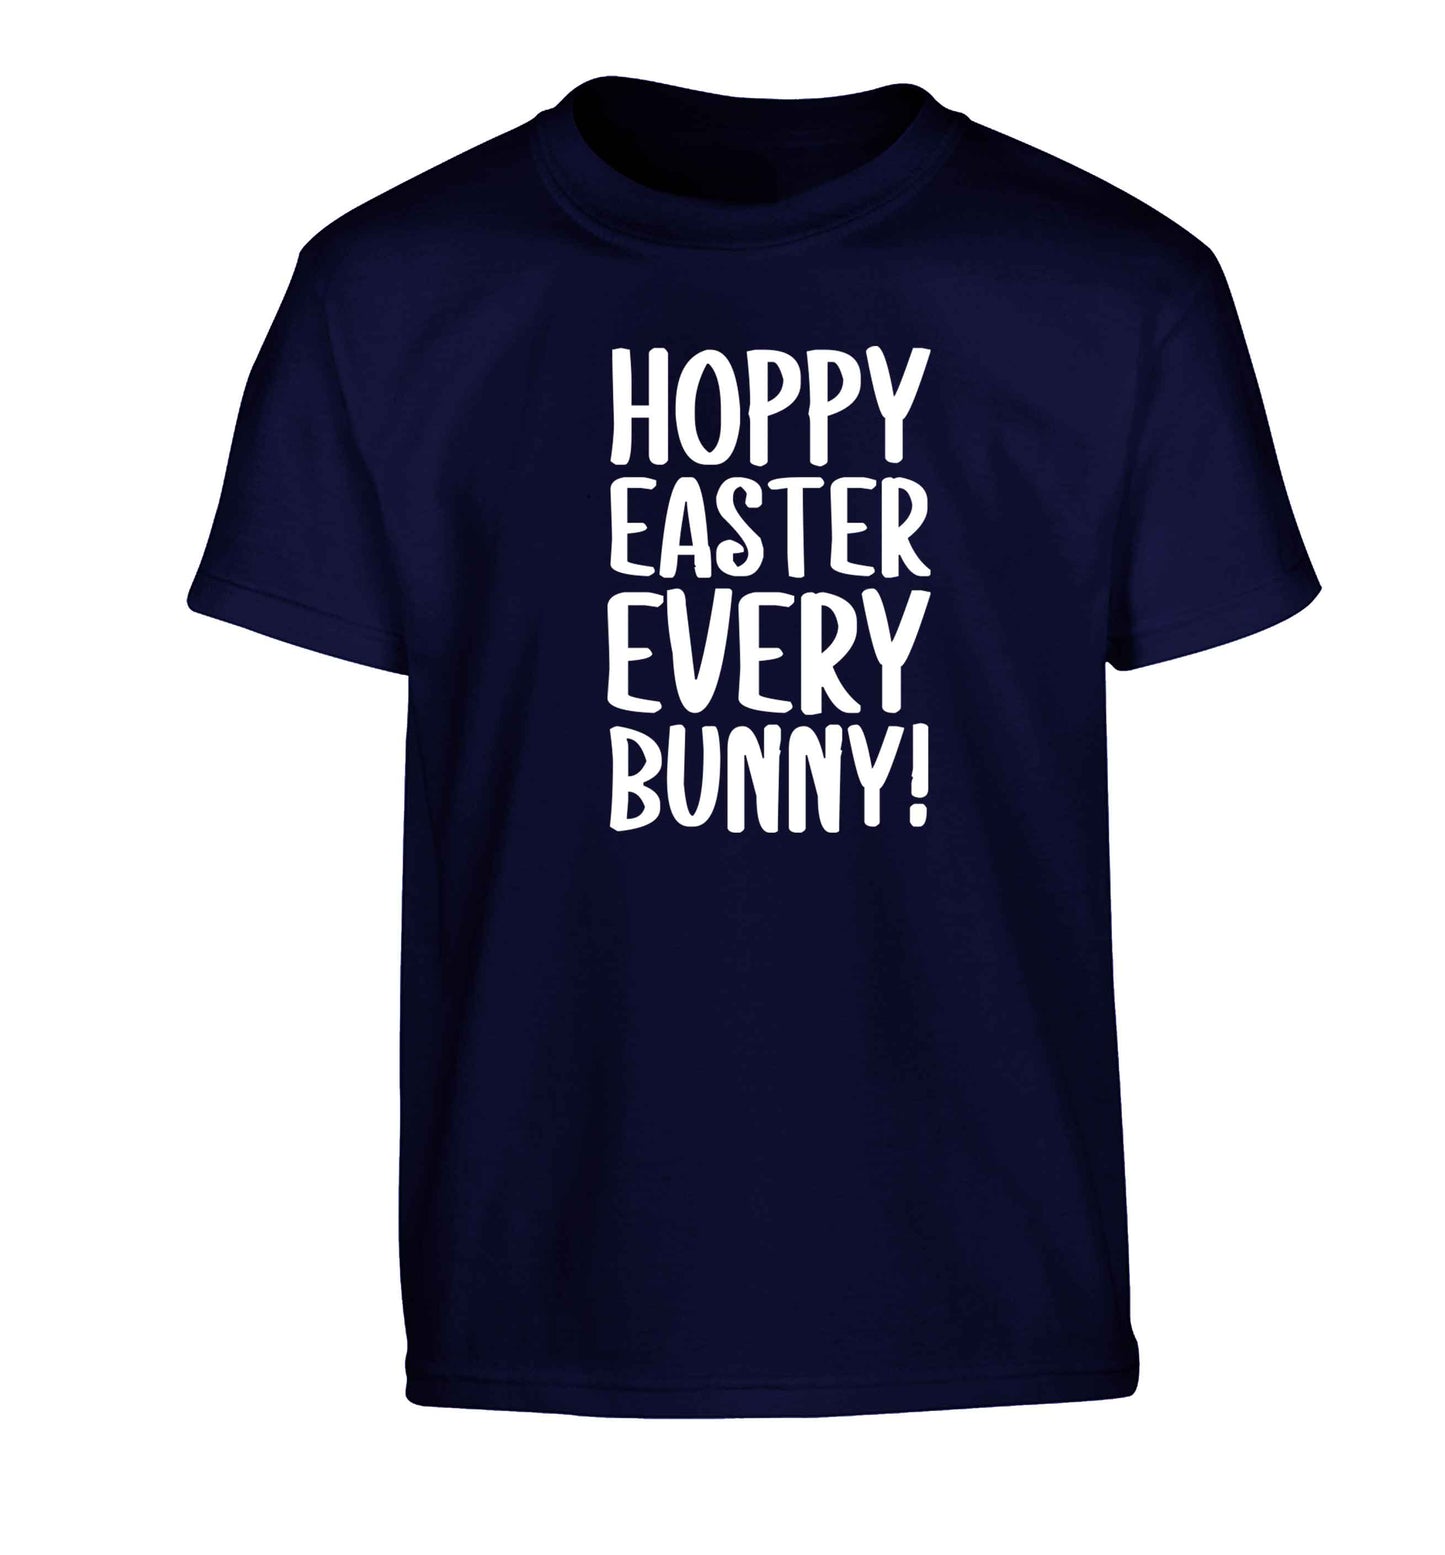 Hoppy Easter every bunny! Children's navy Tshirt 12-13 Years